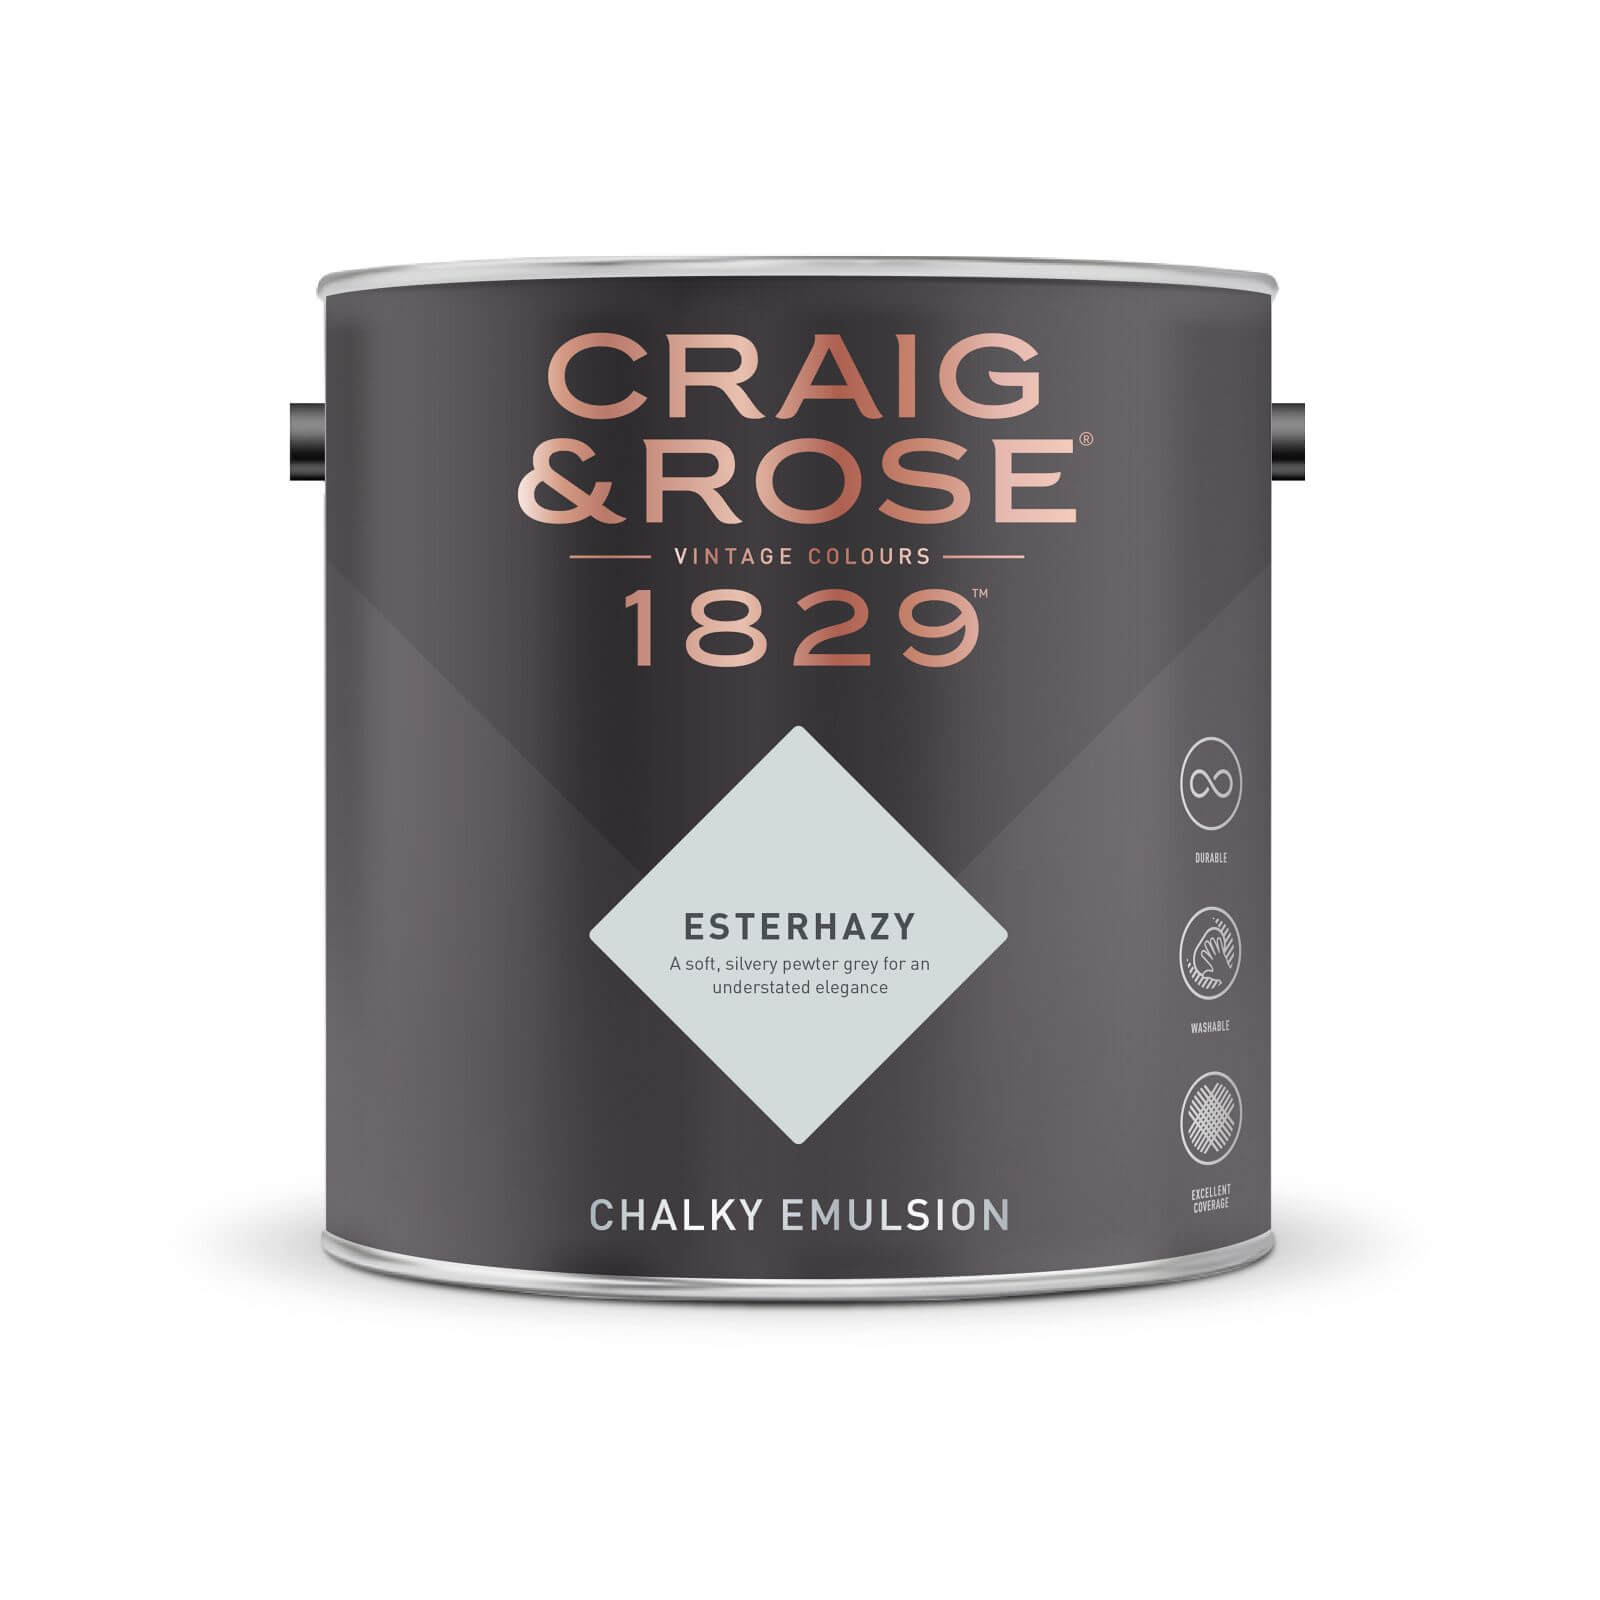 Craig & Rose 1829 Chalky Emulsion Paint Esterhazy - Tester 50ml